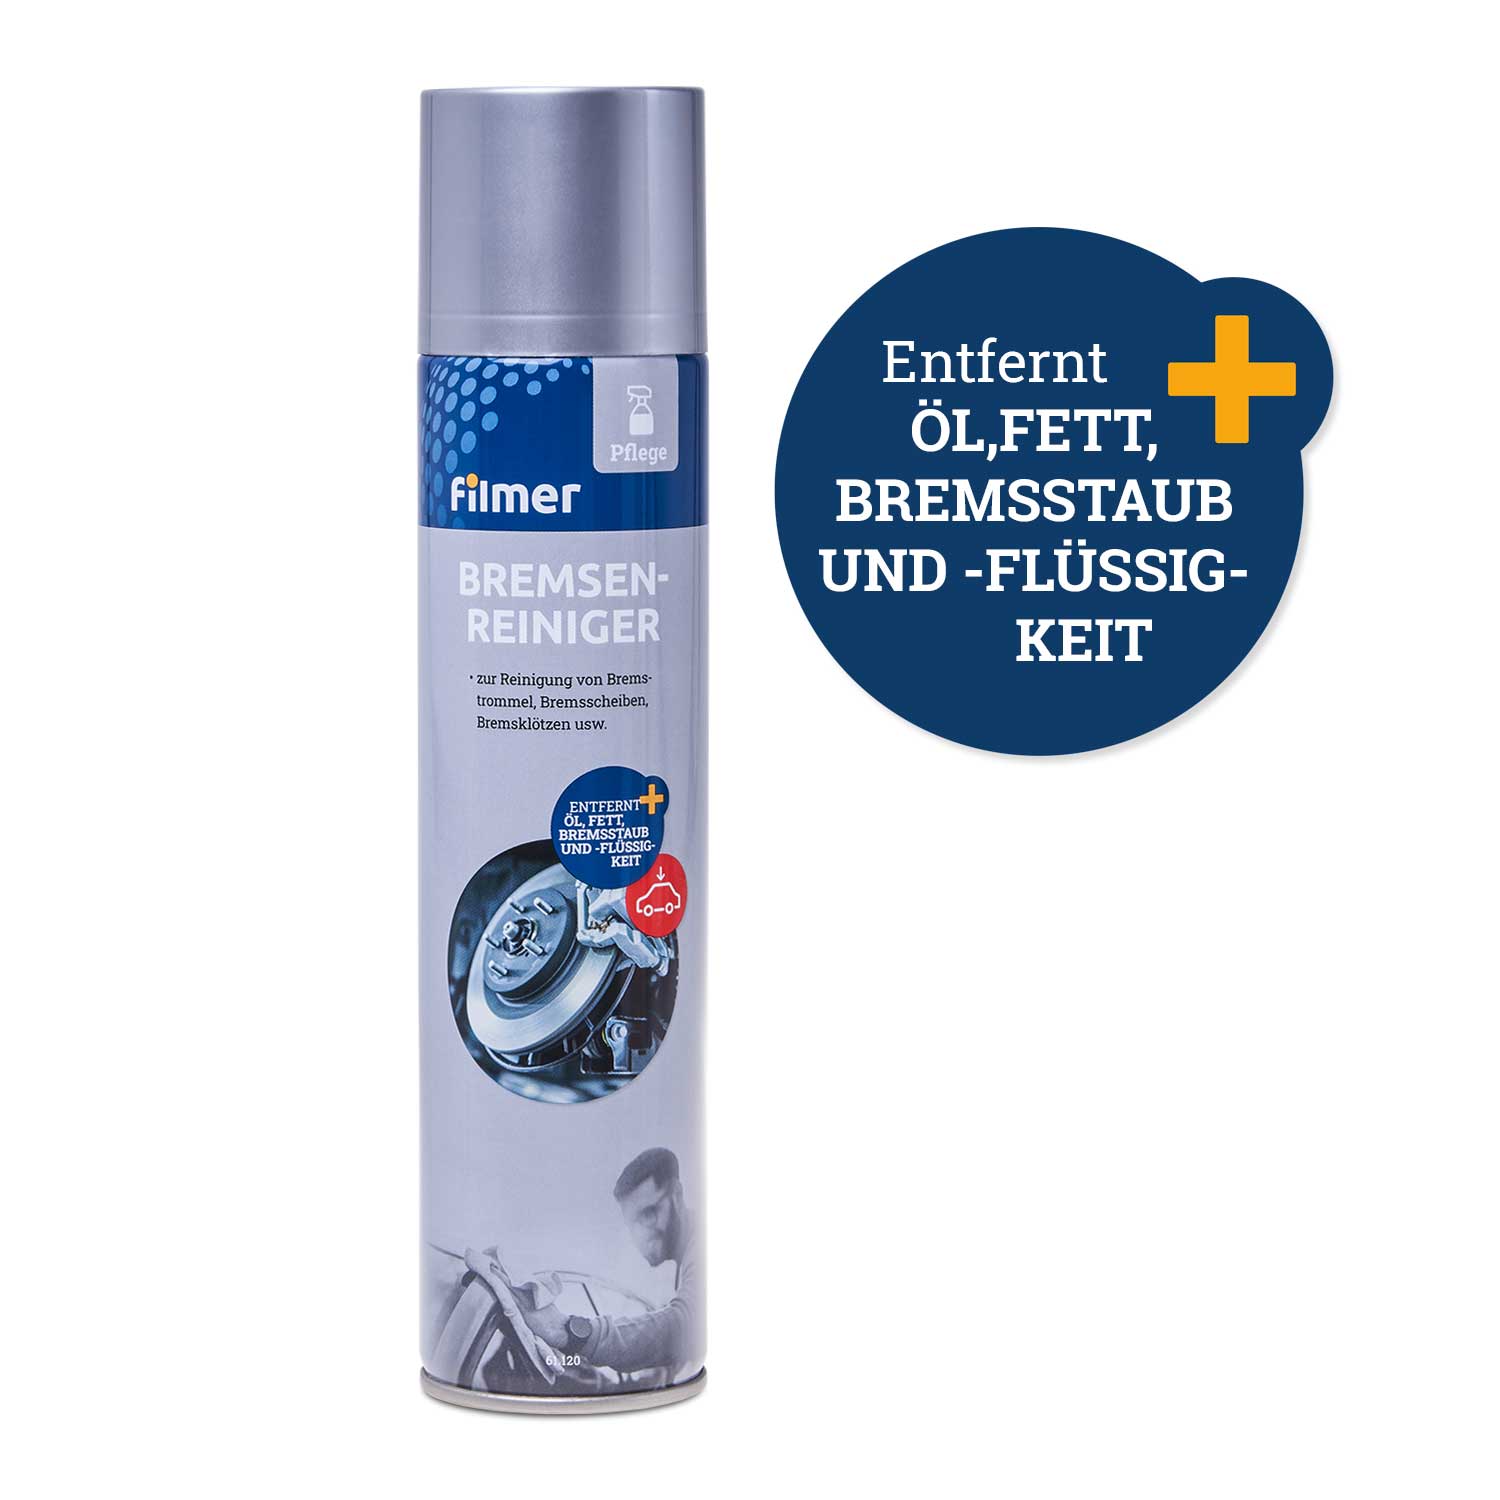 Bremsenreiniger-Spray 300 ml Begr. Menge gem. Kap. 3.4